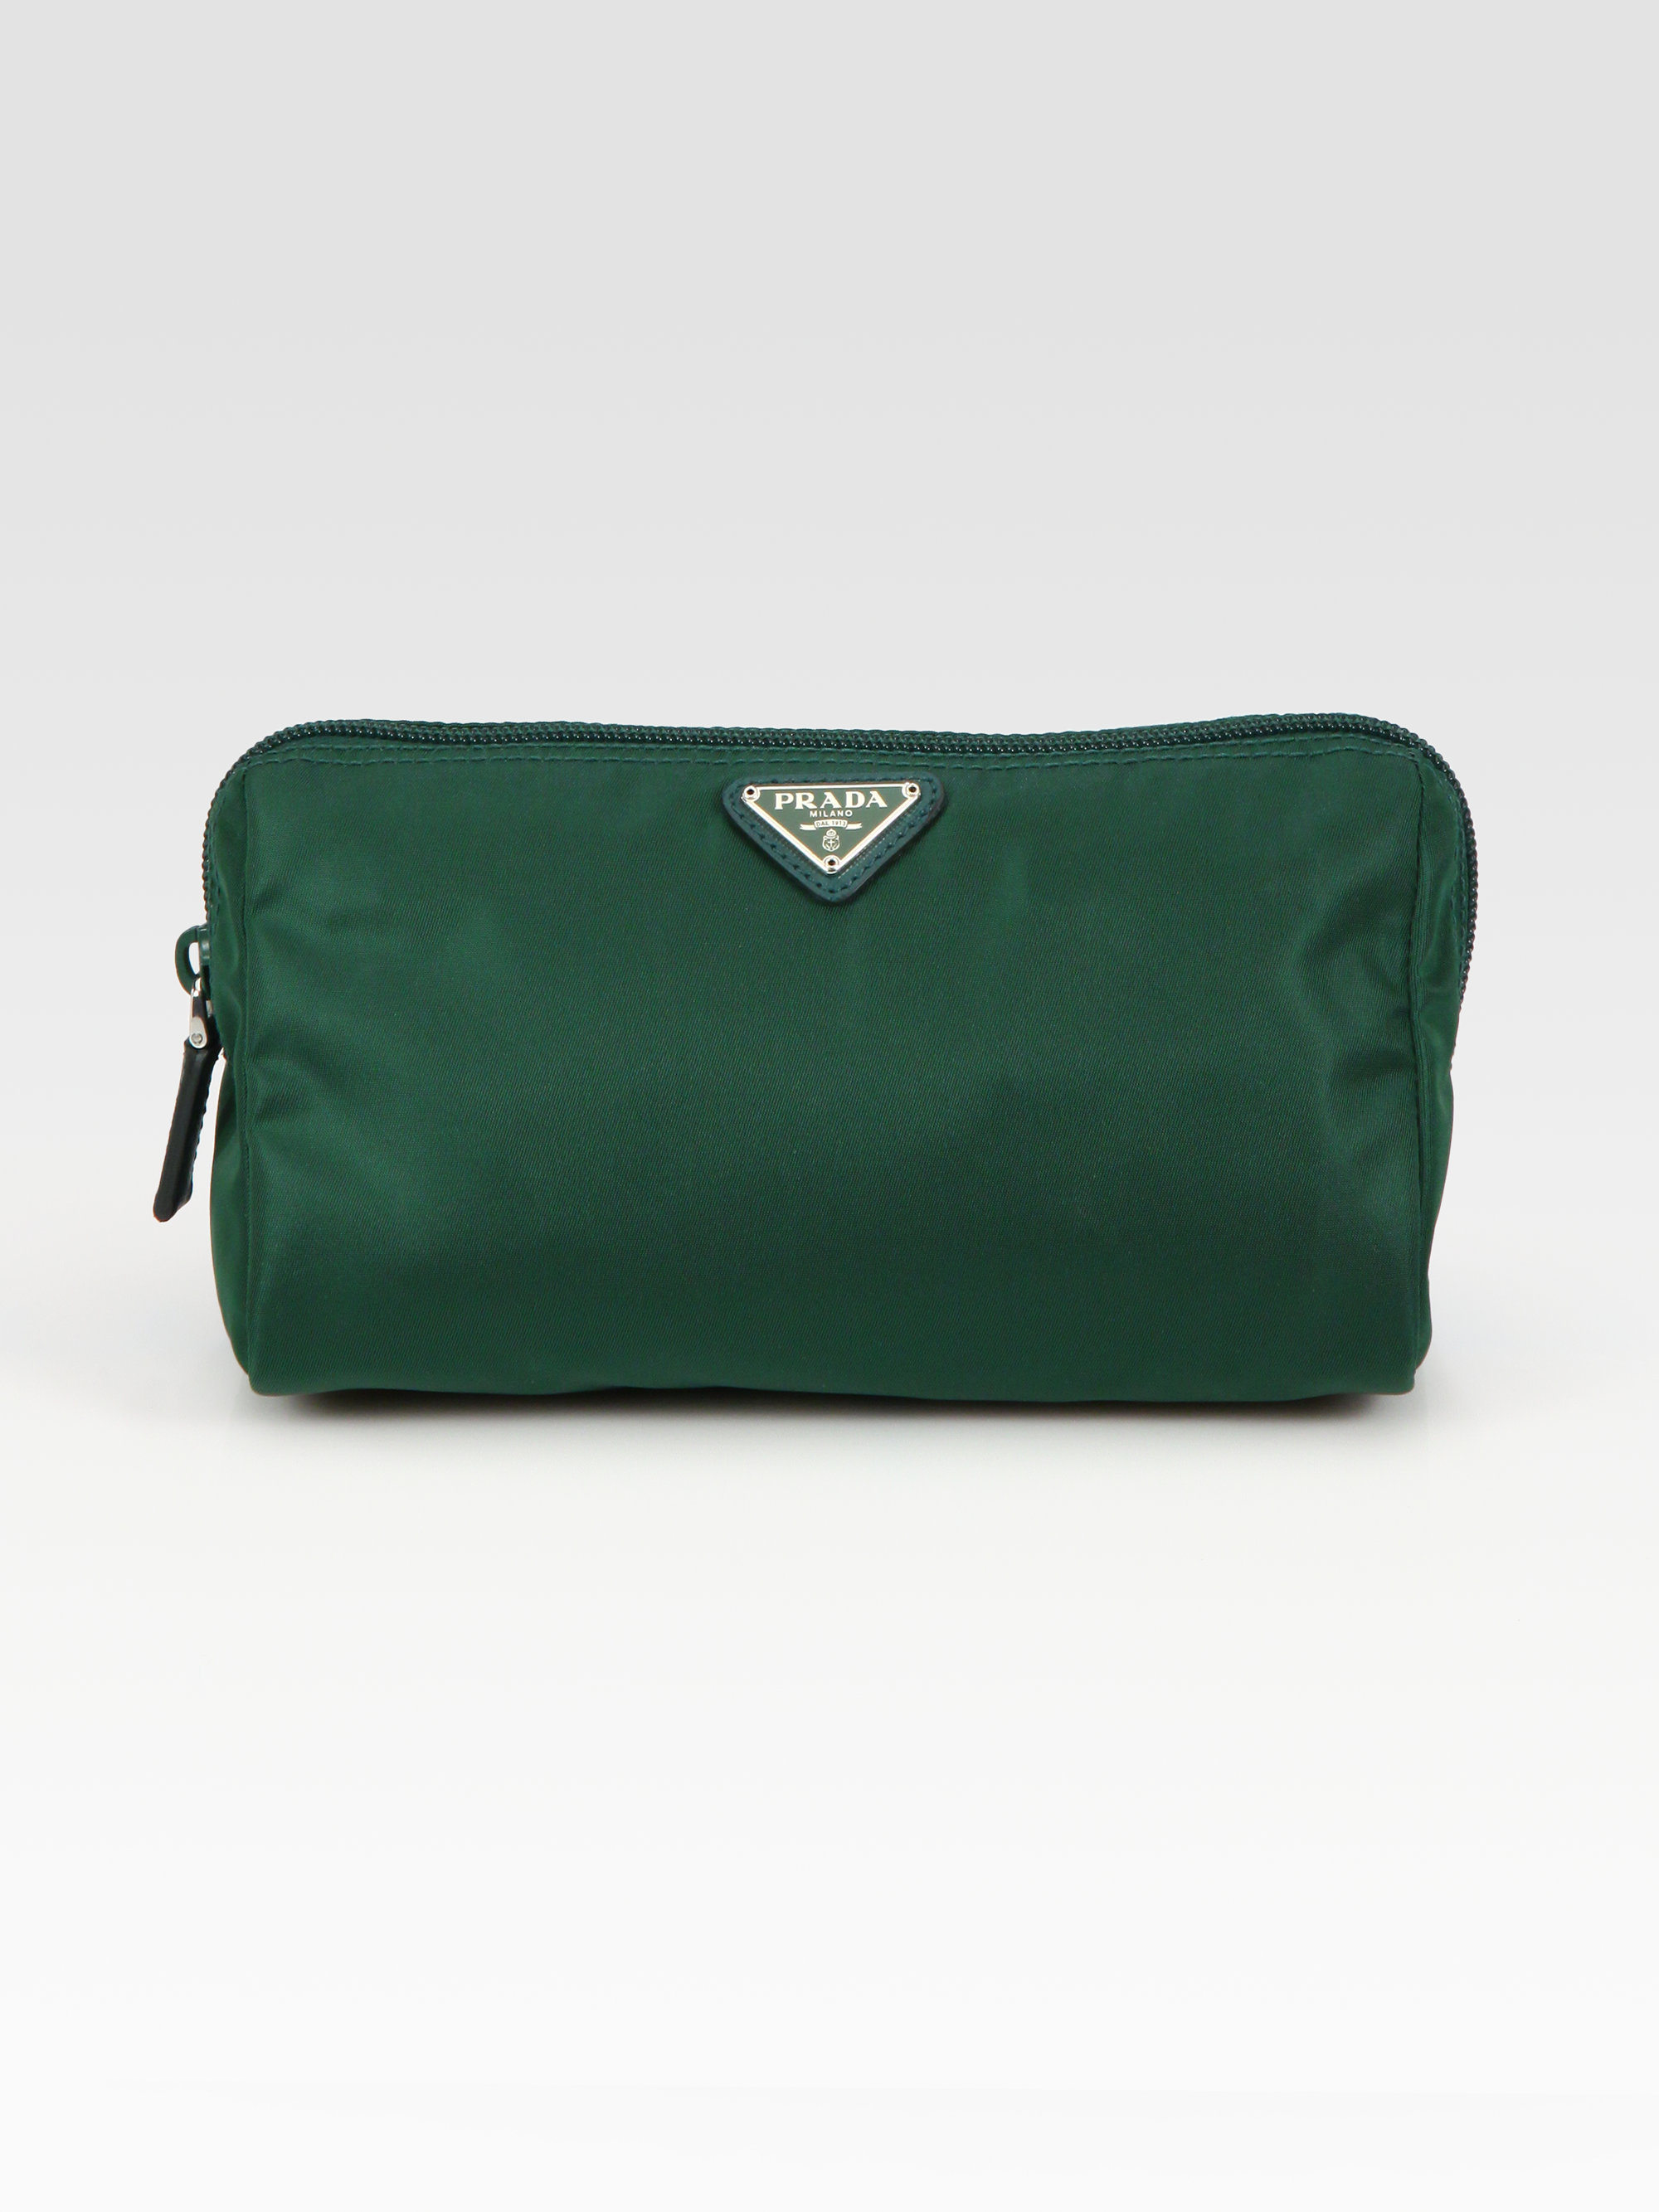 Prada Nylon Triangle Cosmetic Bag in Green | Lyst